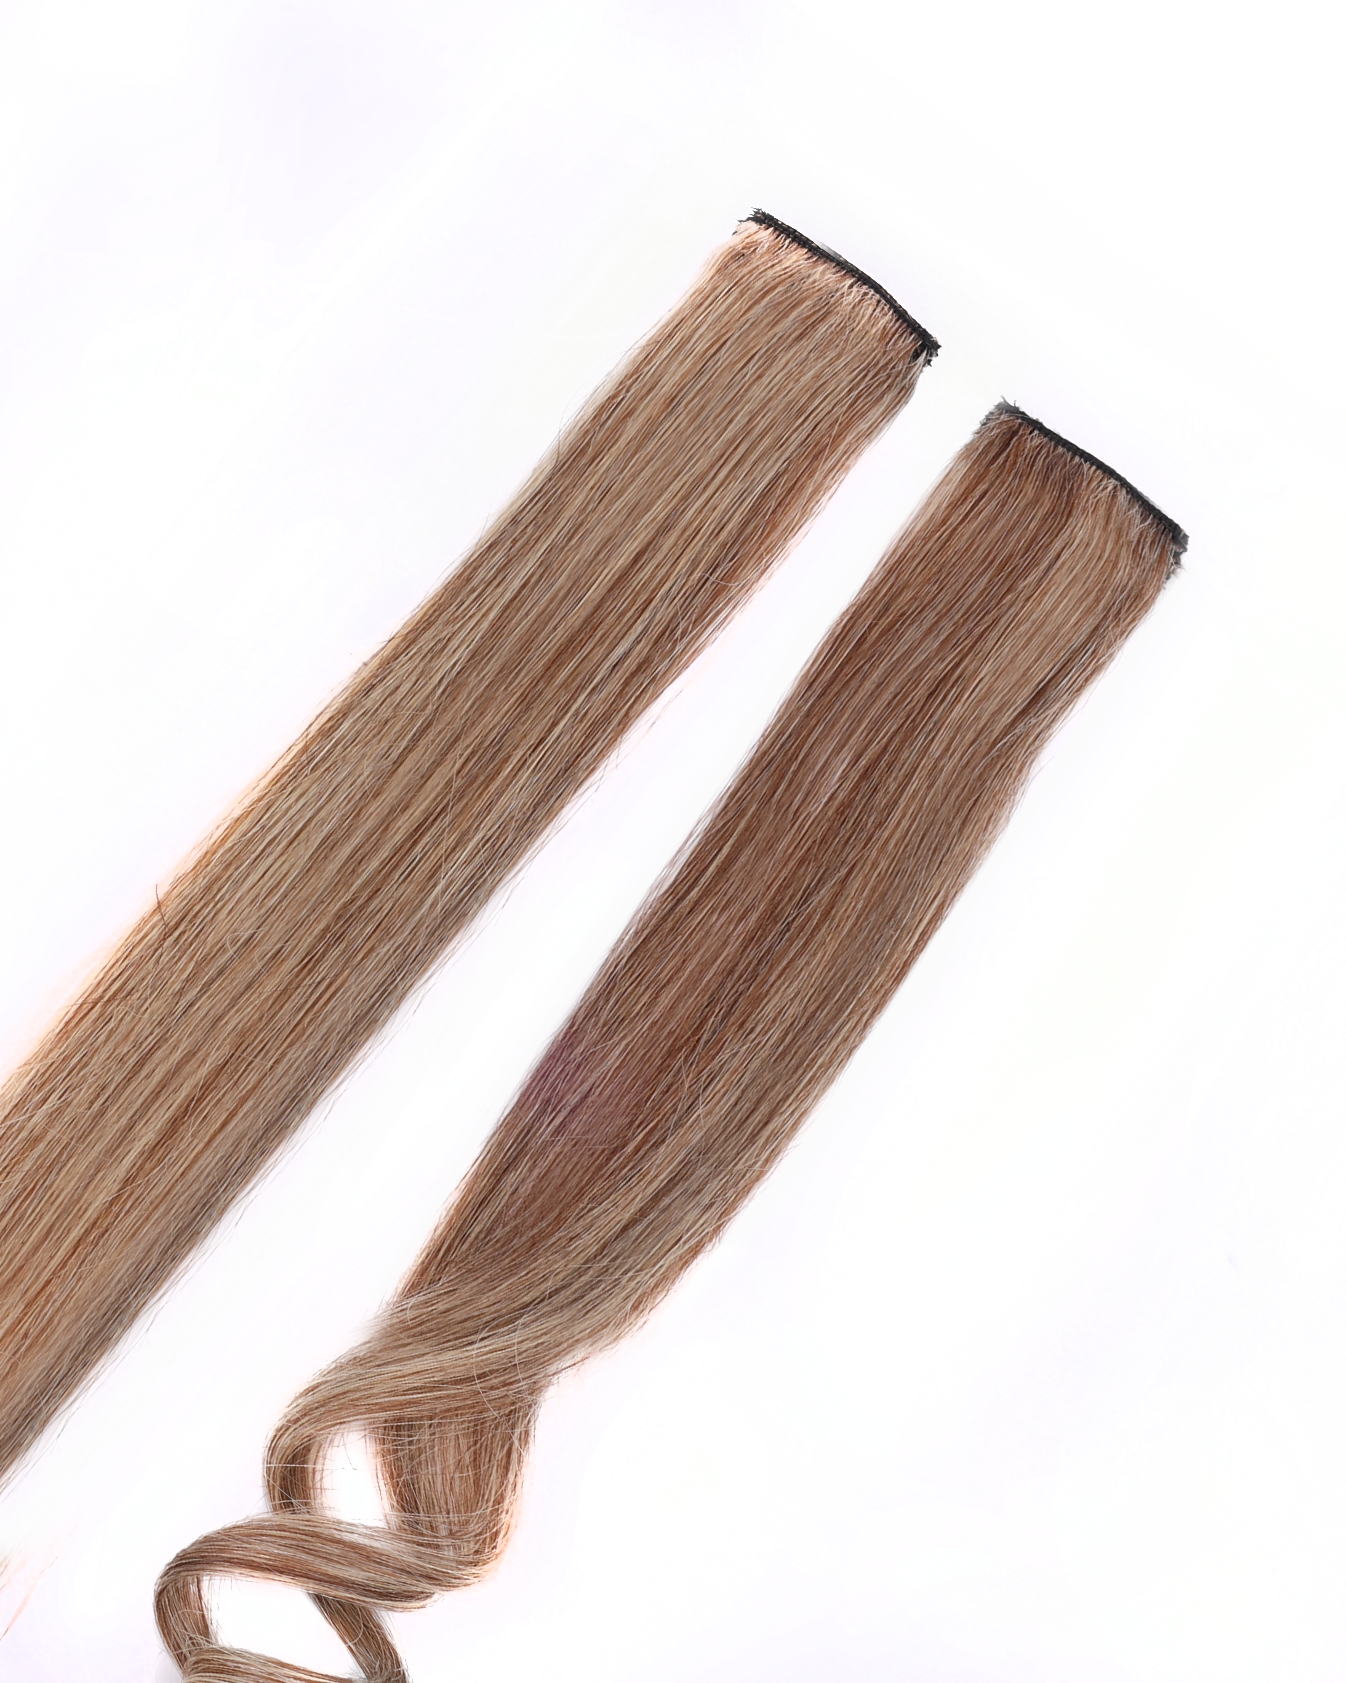 Clip in Hair Streaks  HairOriginals 10 Inch Golden Brown 